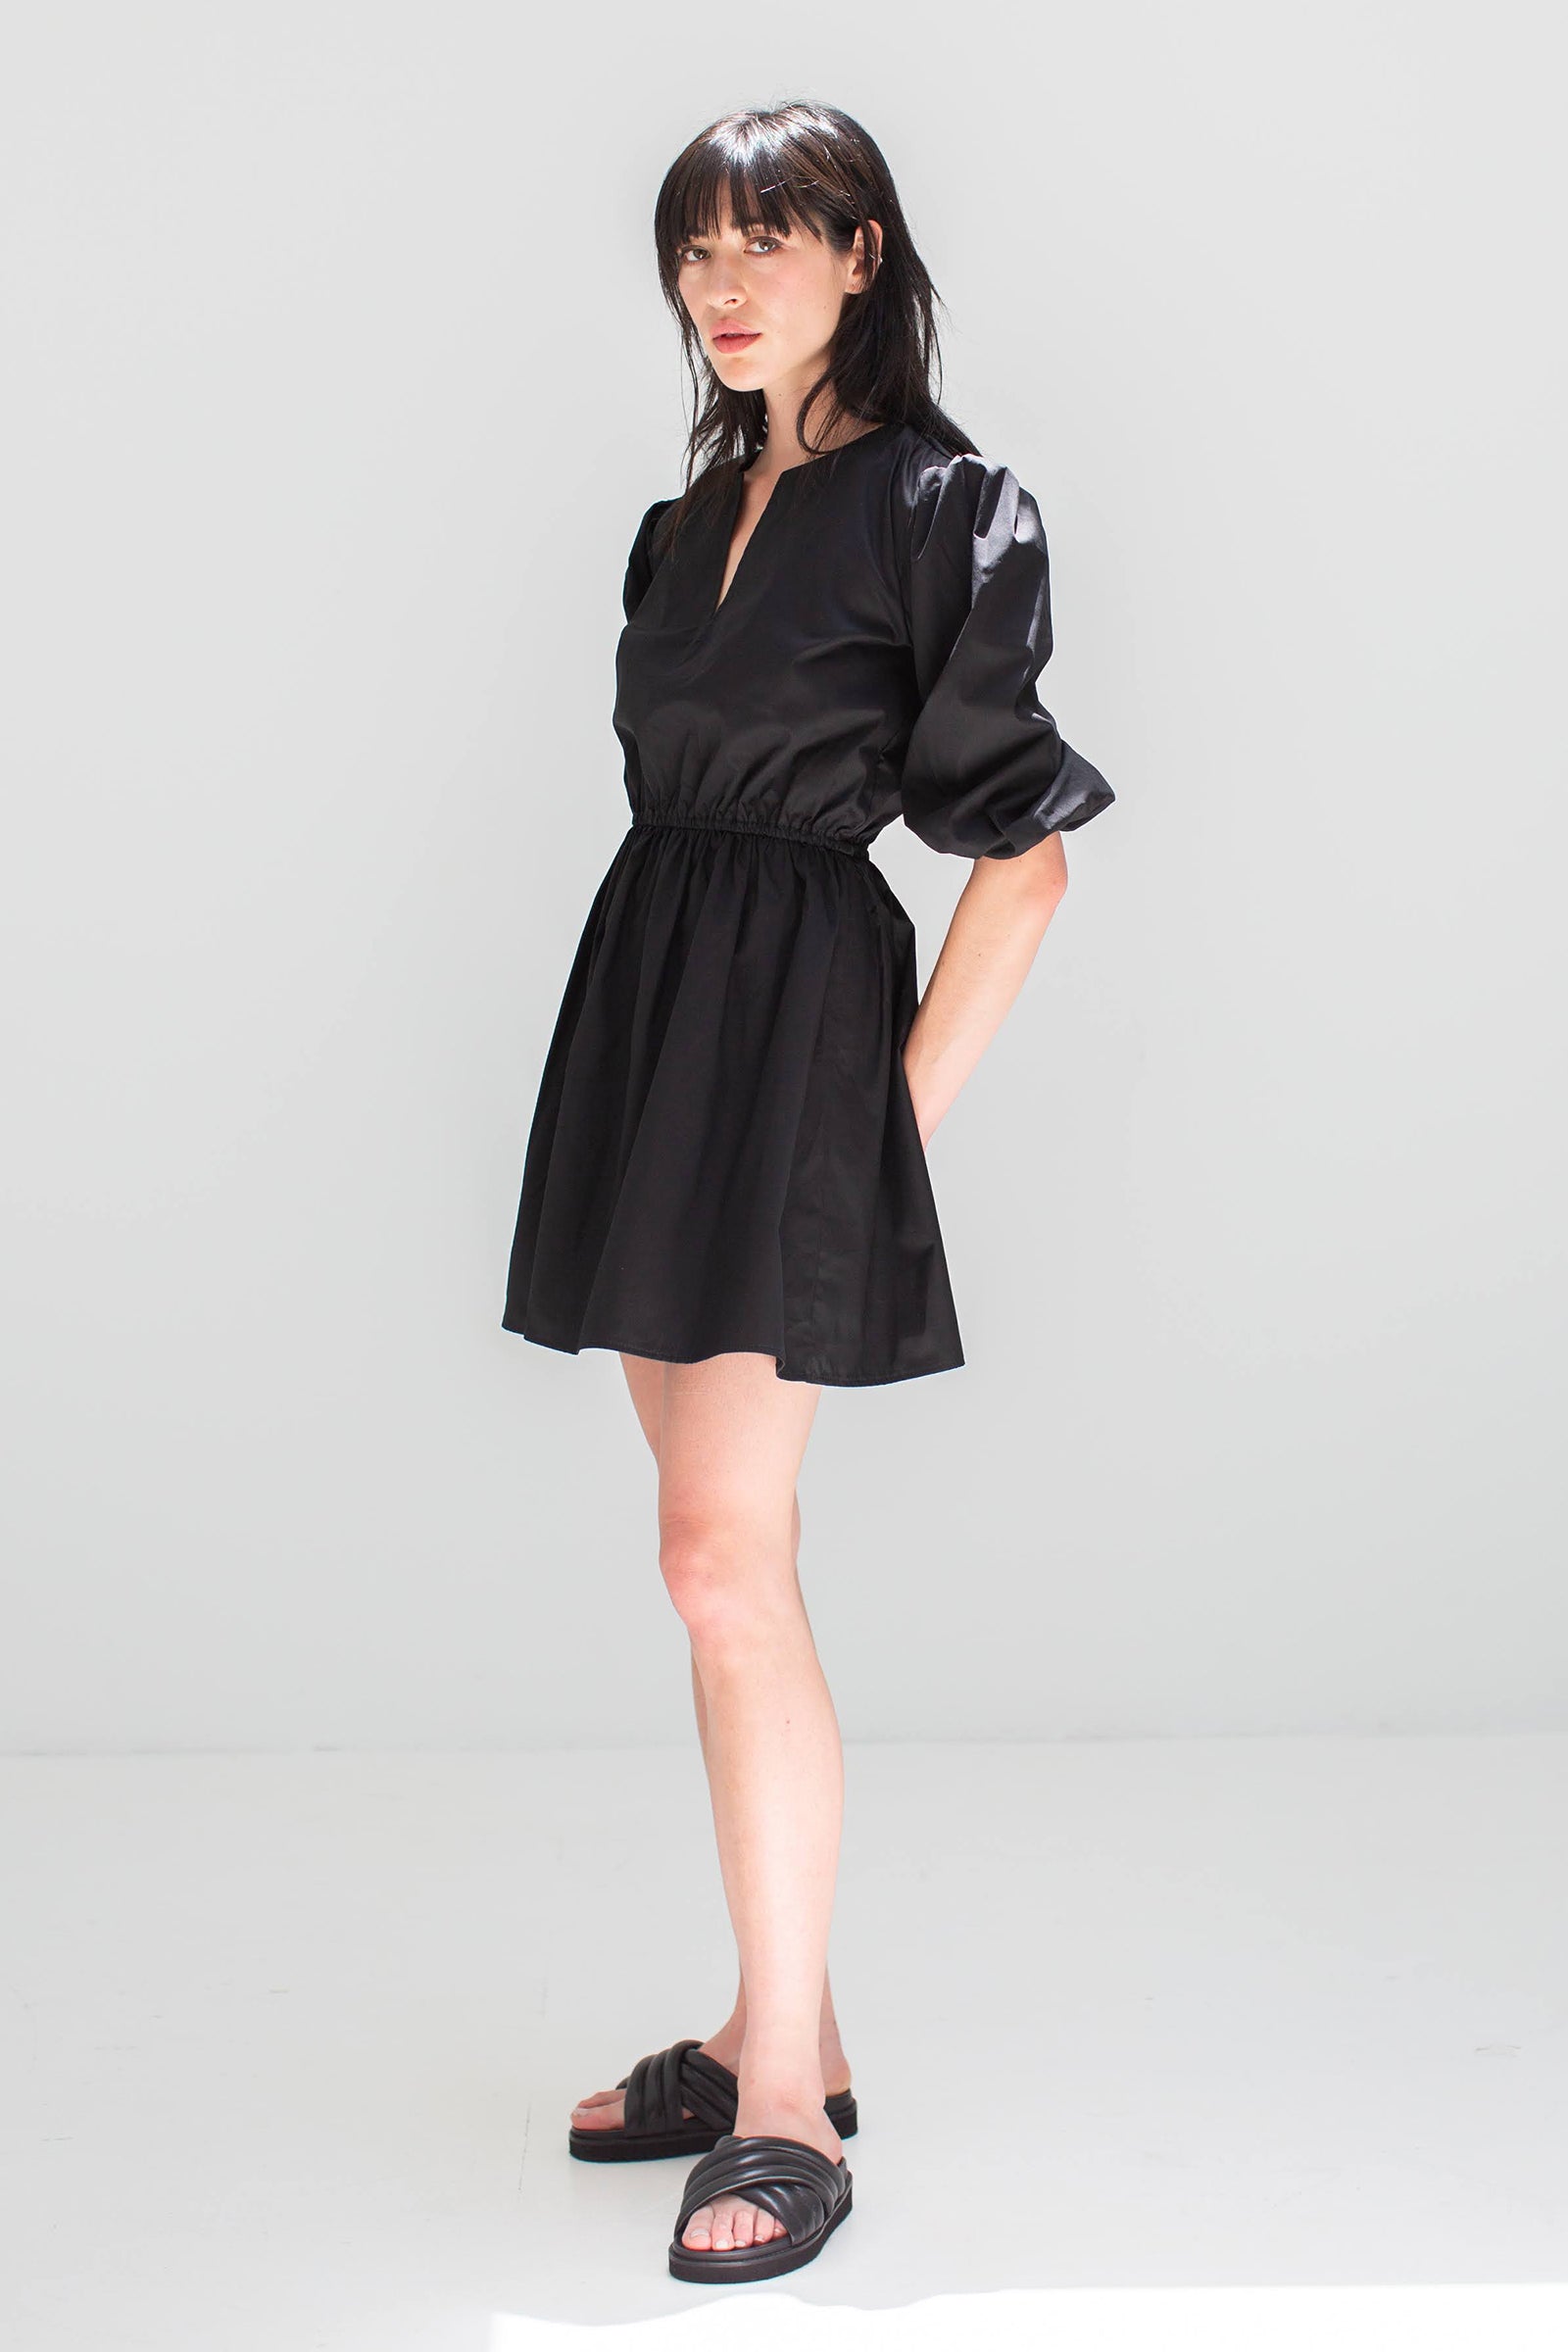 Klein Mini Dress in Black